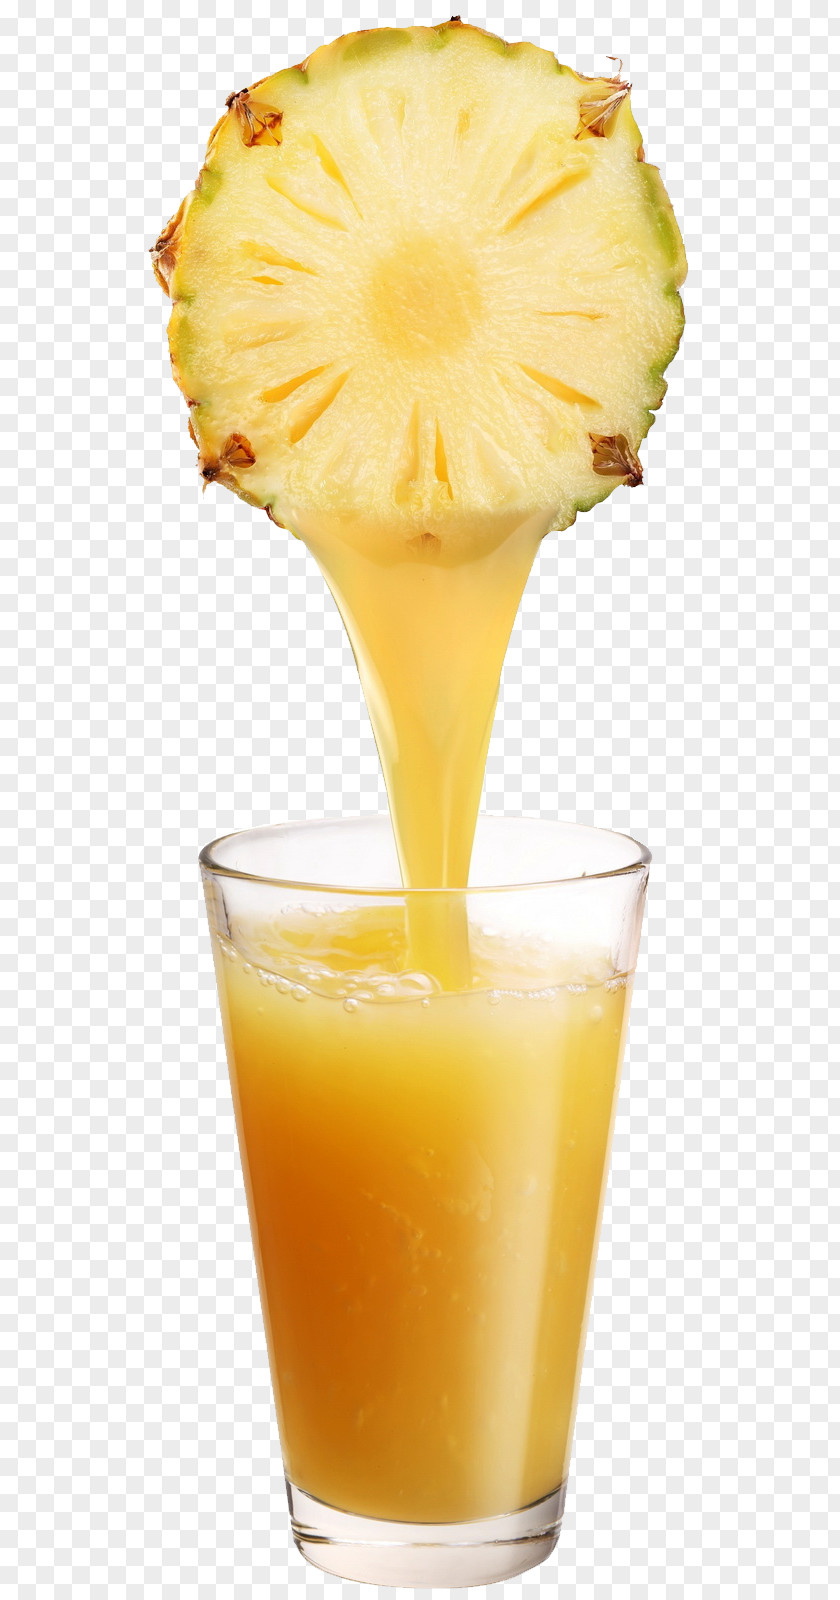 Lemonade Orange Juice Tomato Apple PNG